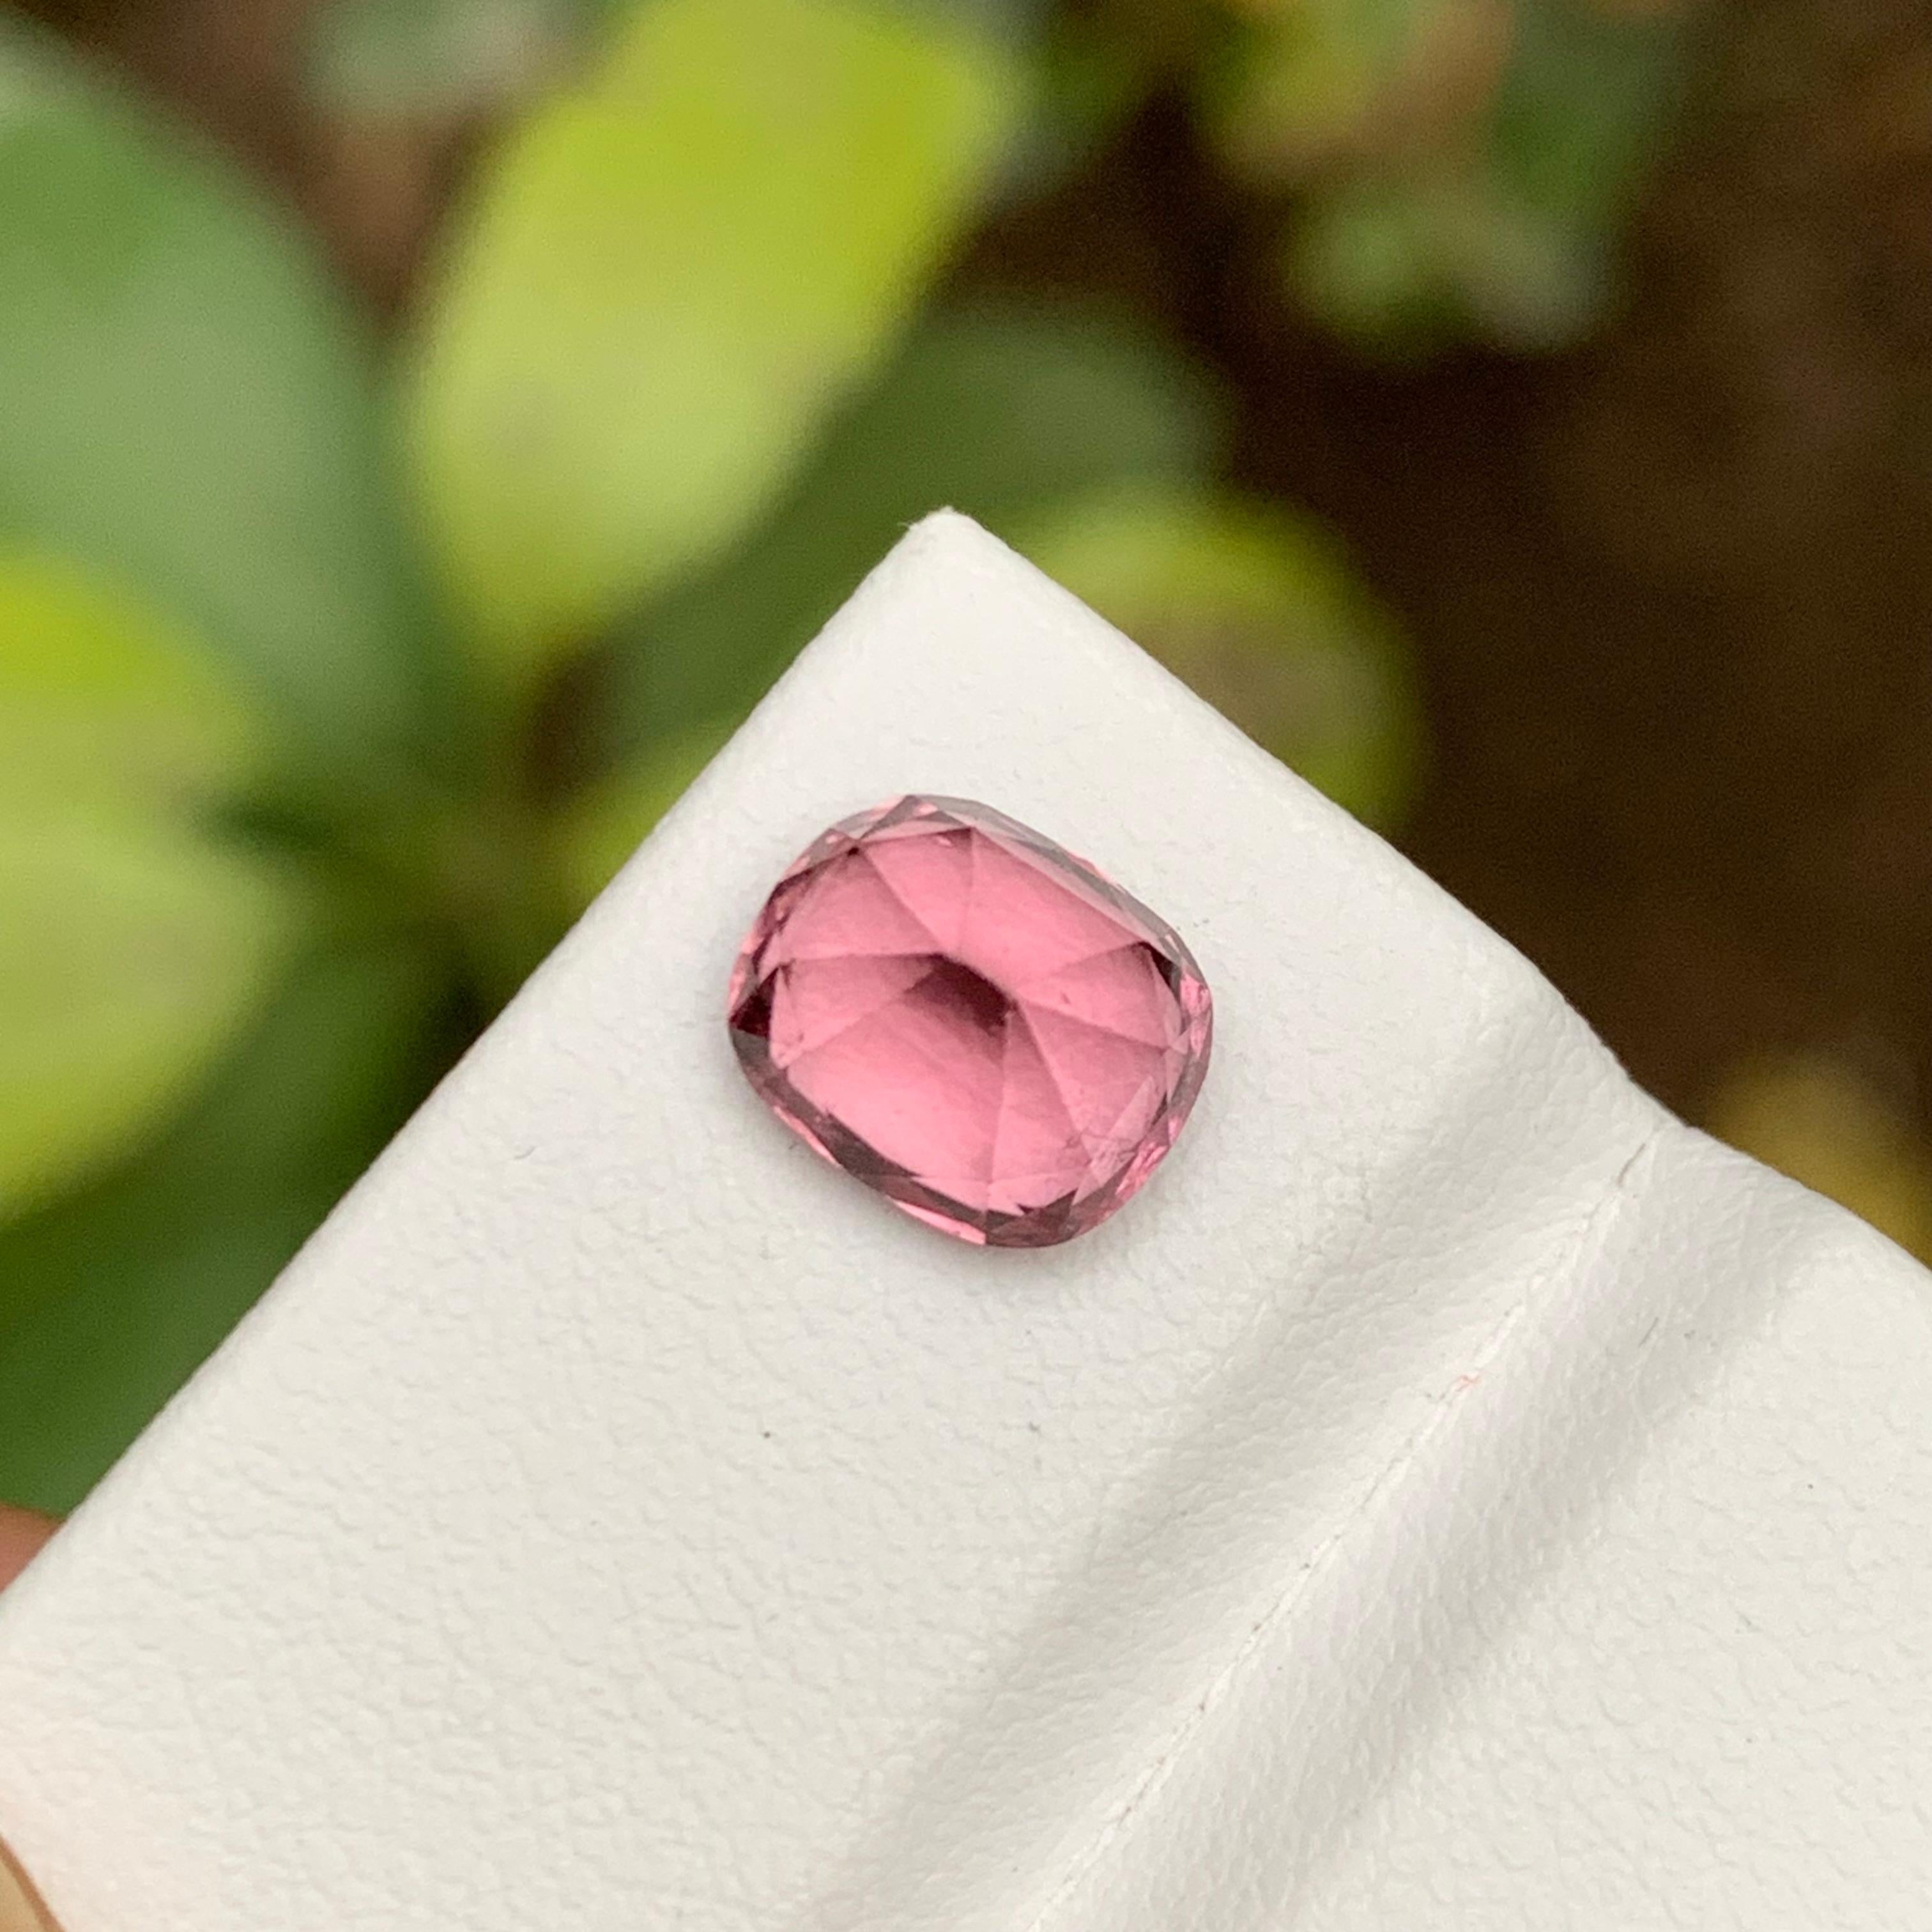 Rare Pink Natural Tourmaline Loose Gemstone, 2.65 Carat Cushion Cut for Ring Afg For Sale 1